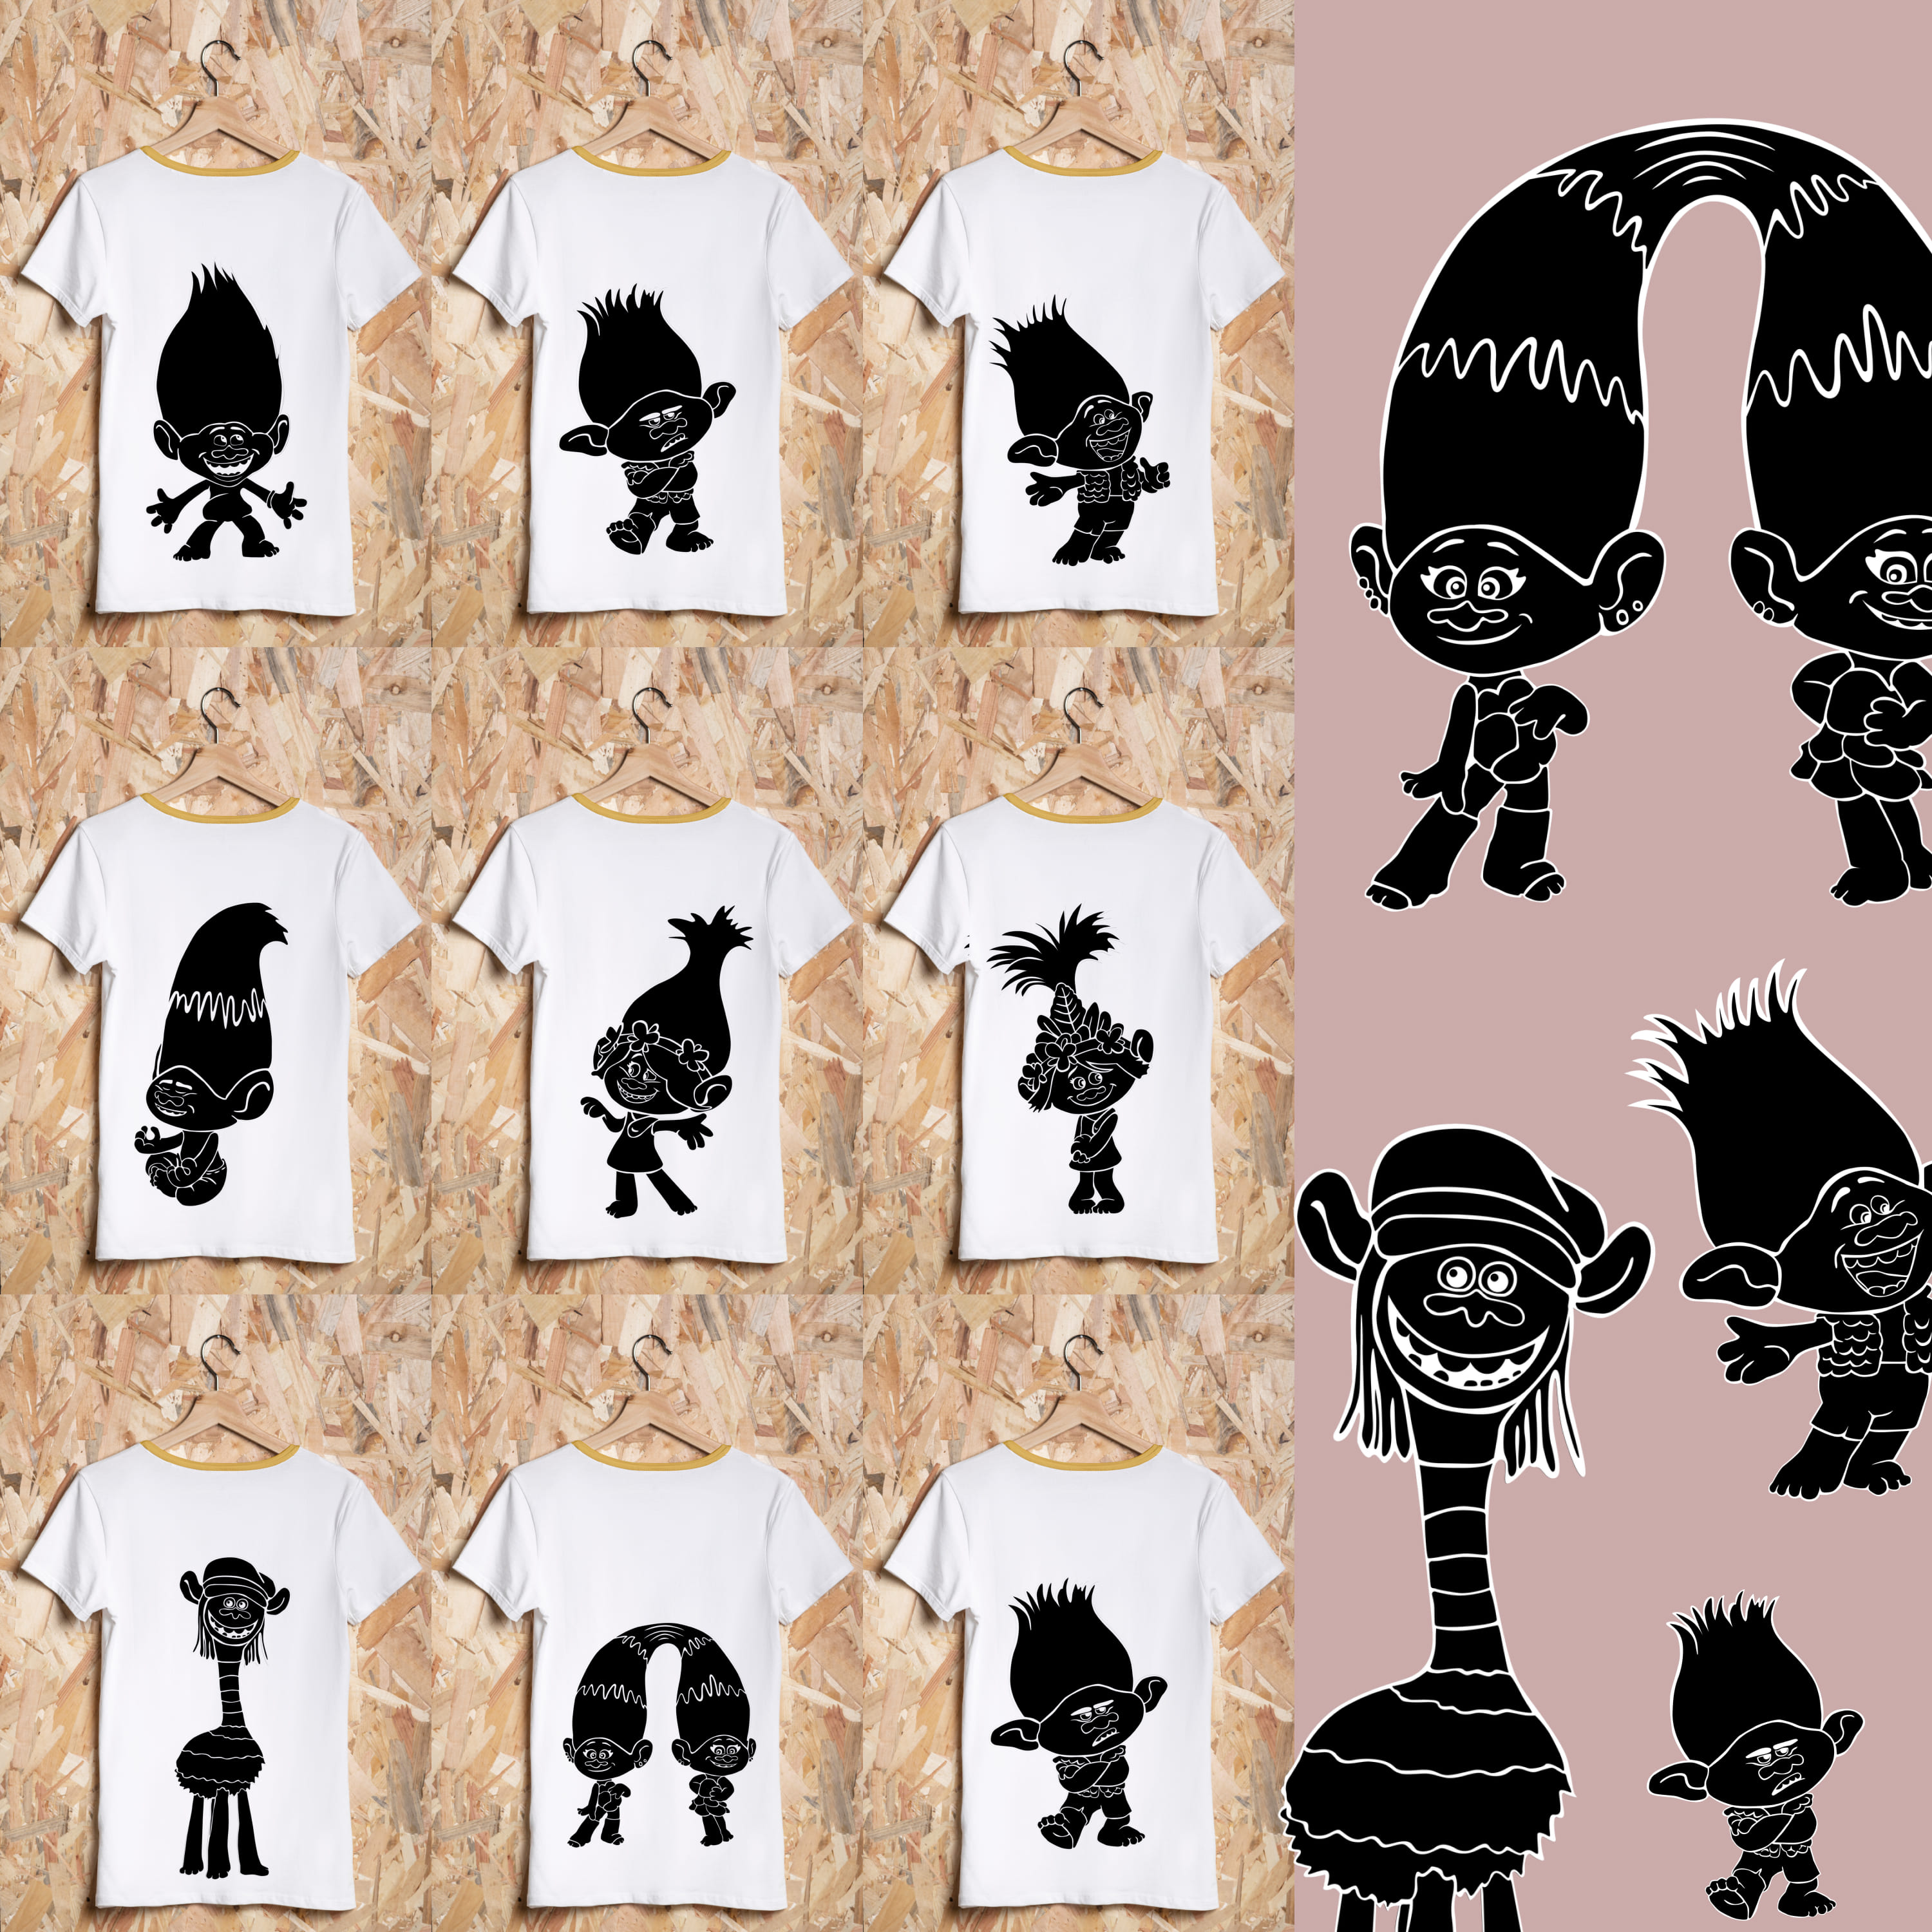 Prints of 8 Monochrome T-shirt Designs Cover.